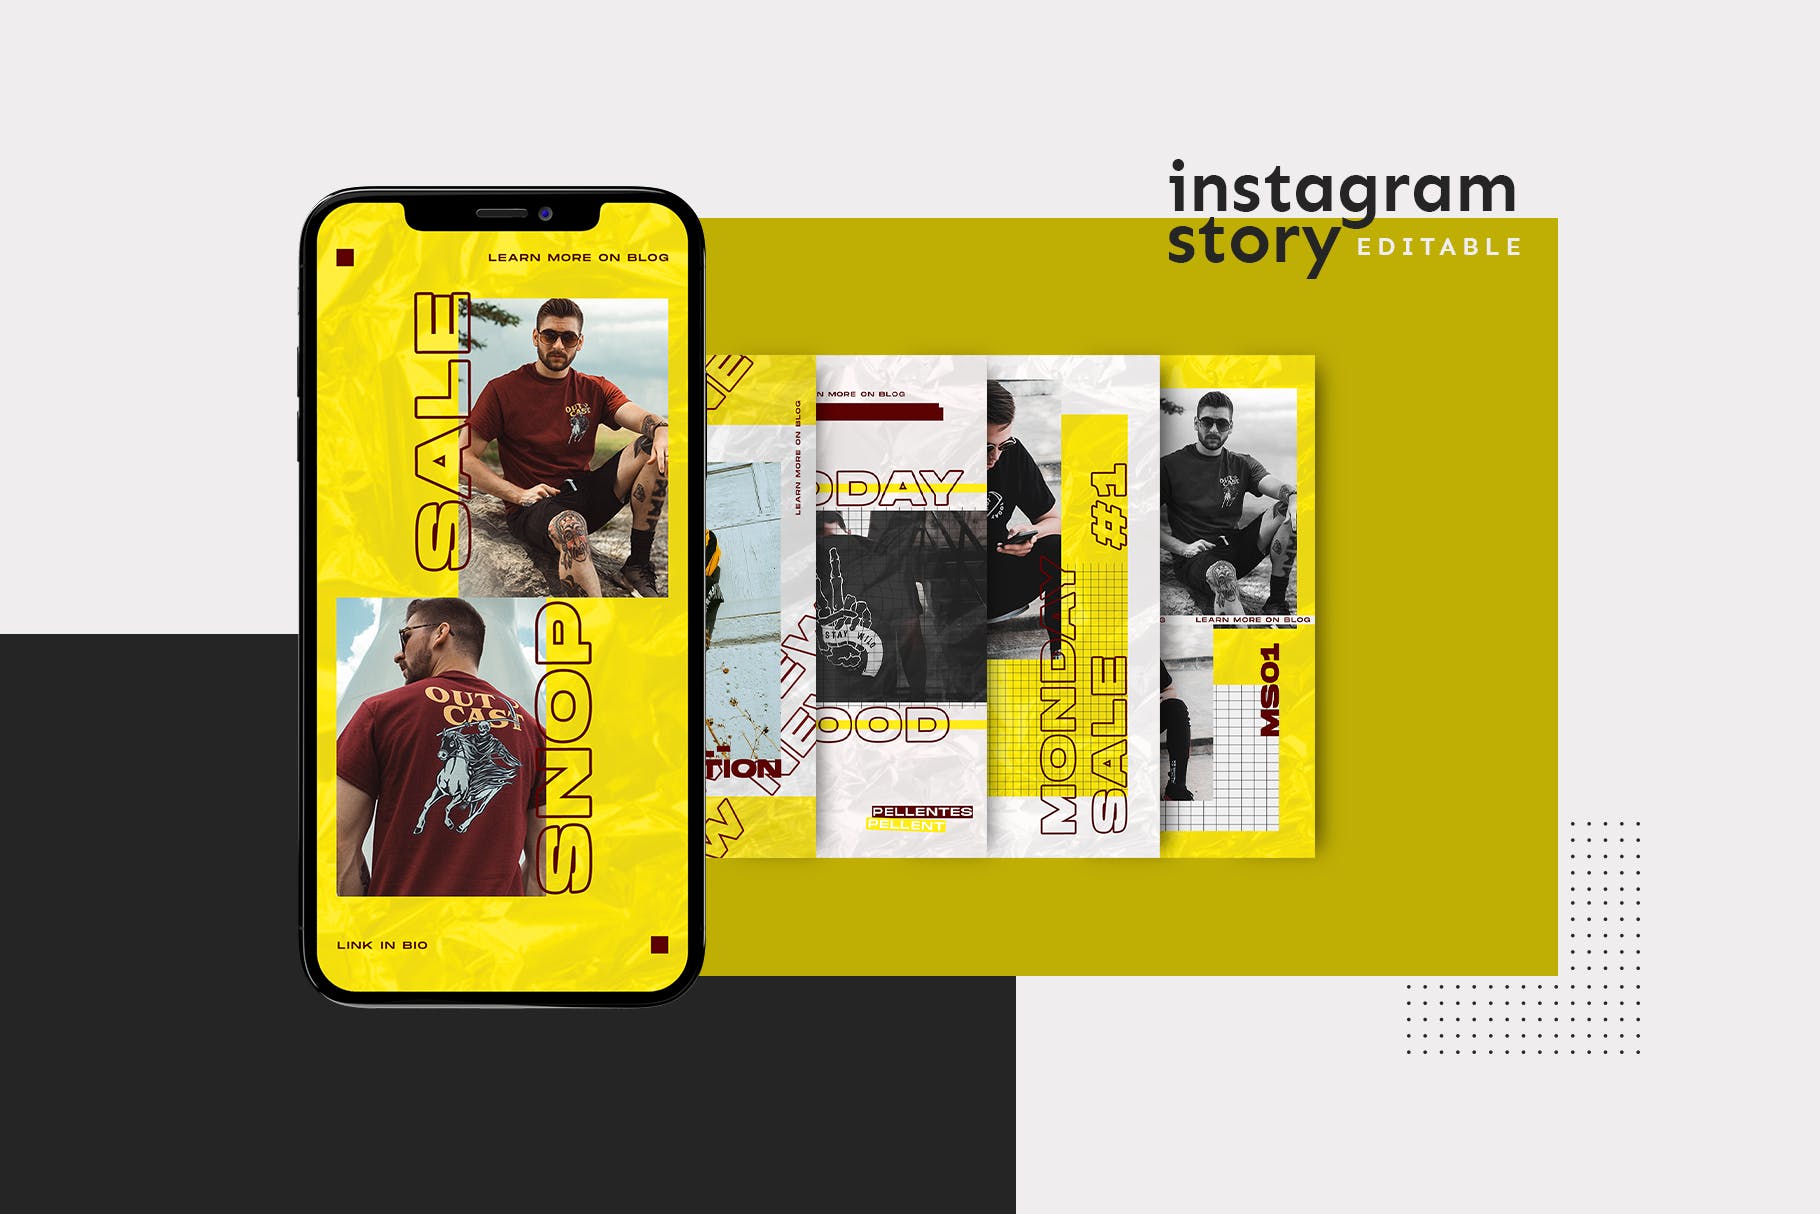 Instagram社交平台品牌故事广告设计模板第一素材精选 Instagram Story Template插图(1)